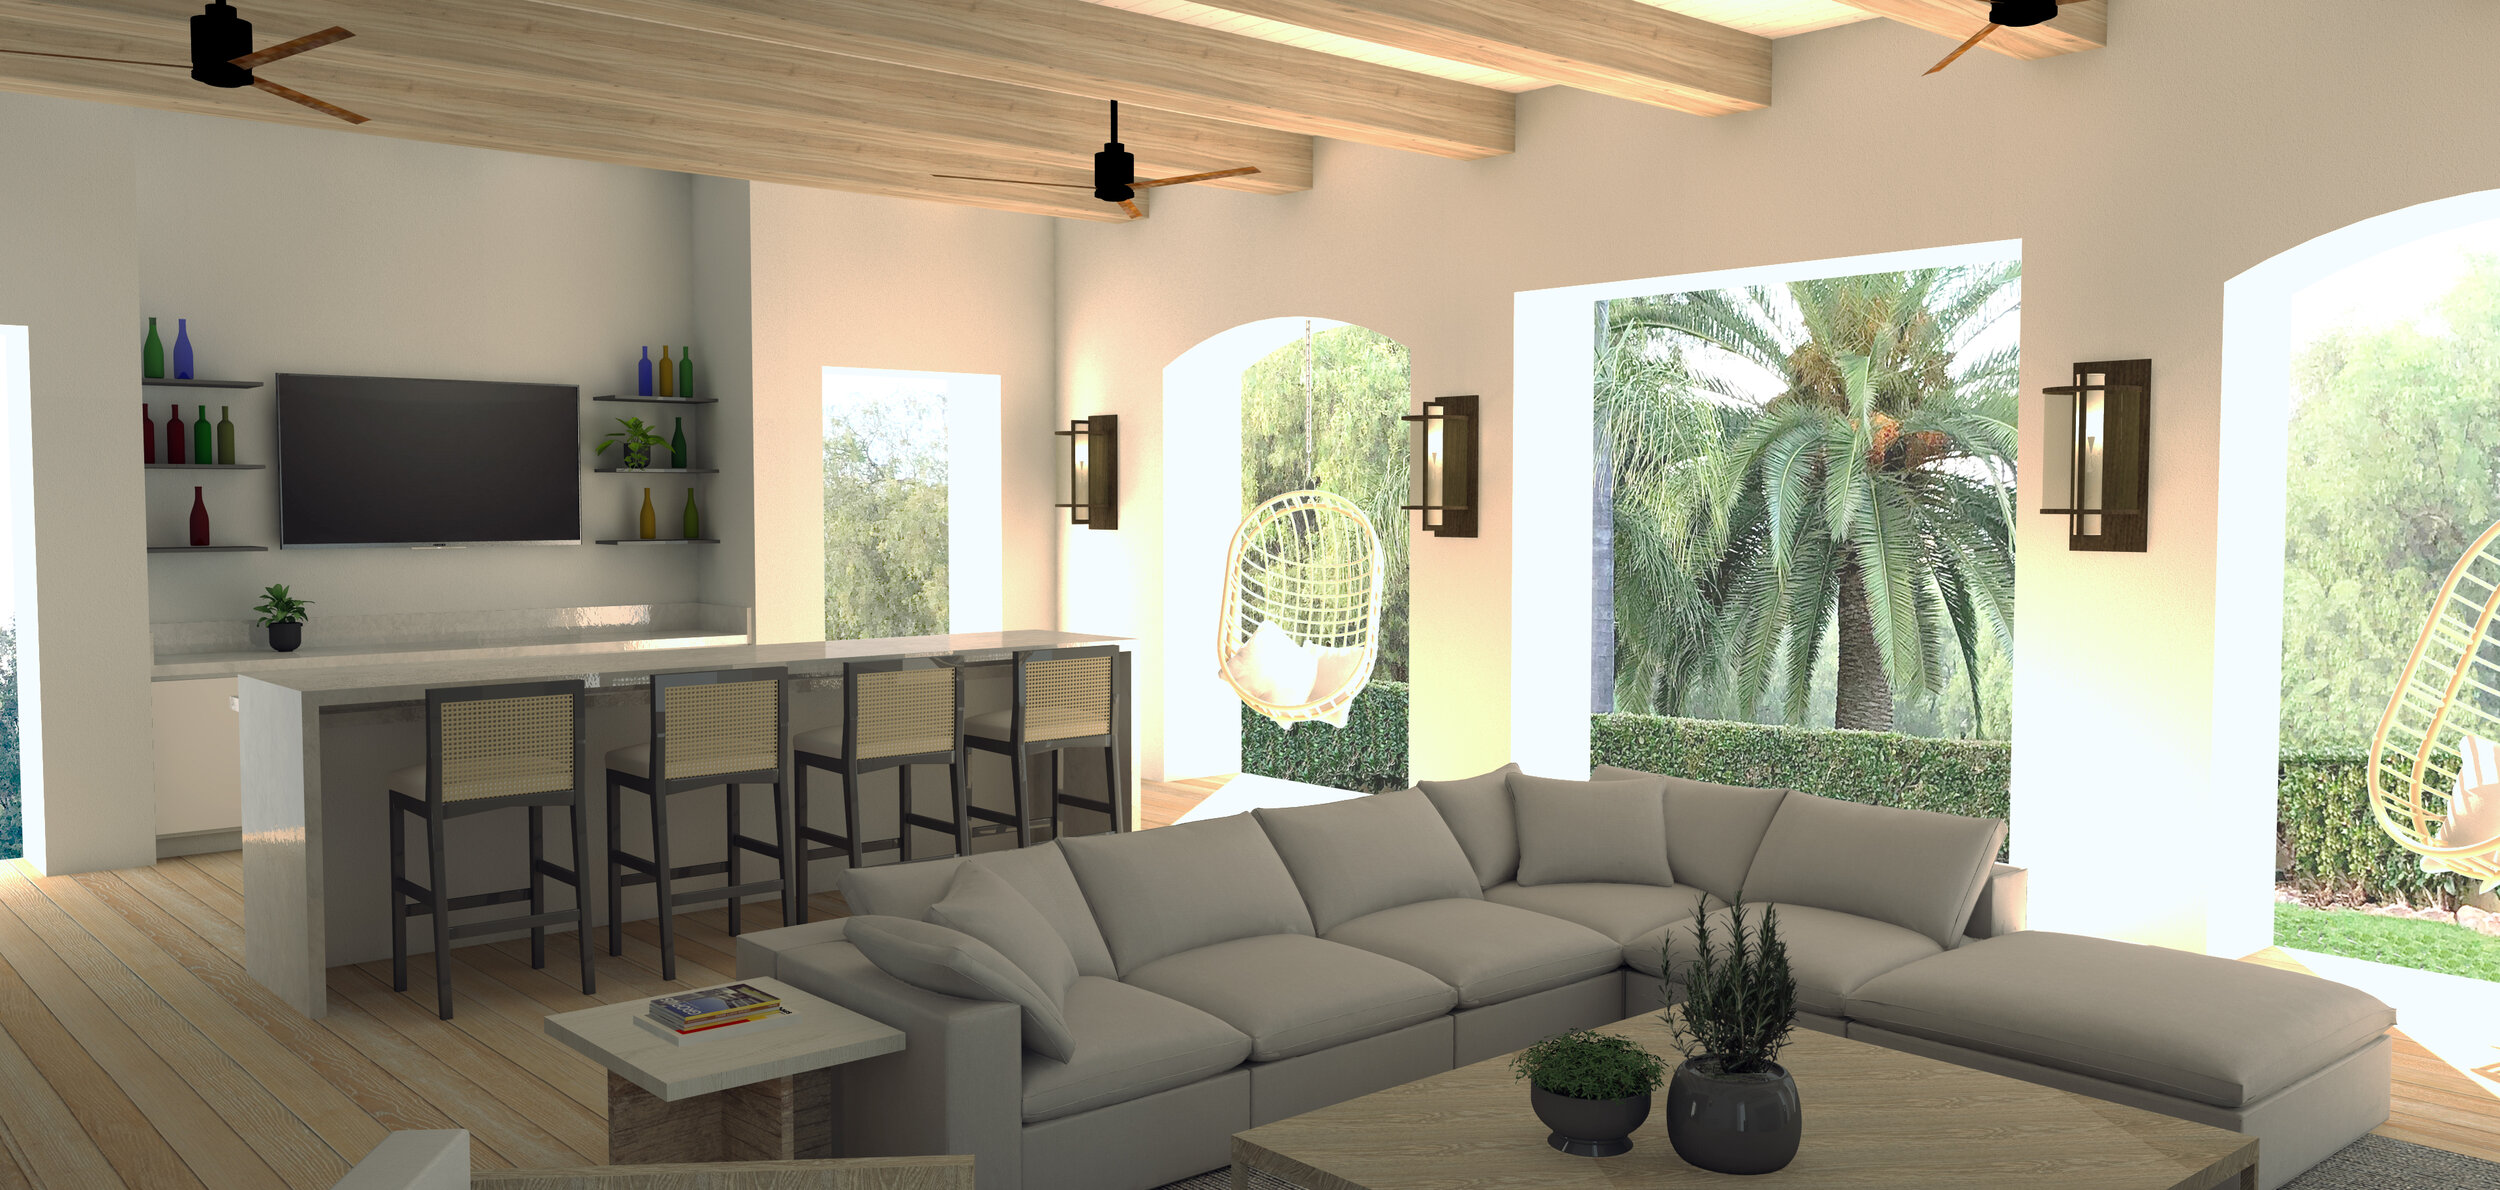 liz-tapper-interiors-outdoor-living room-interior-design-rendering.jpg